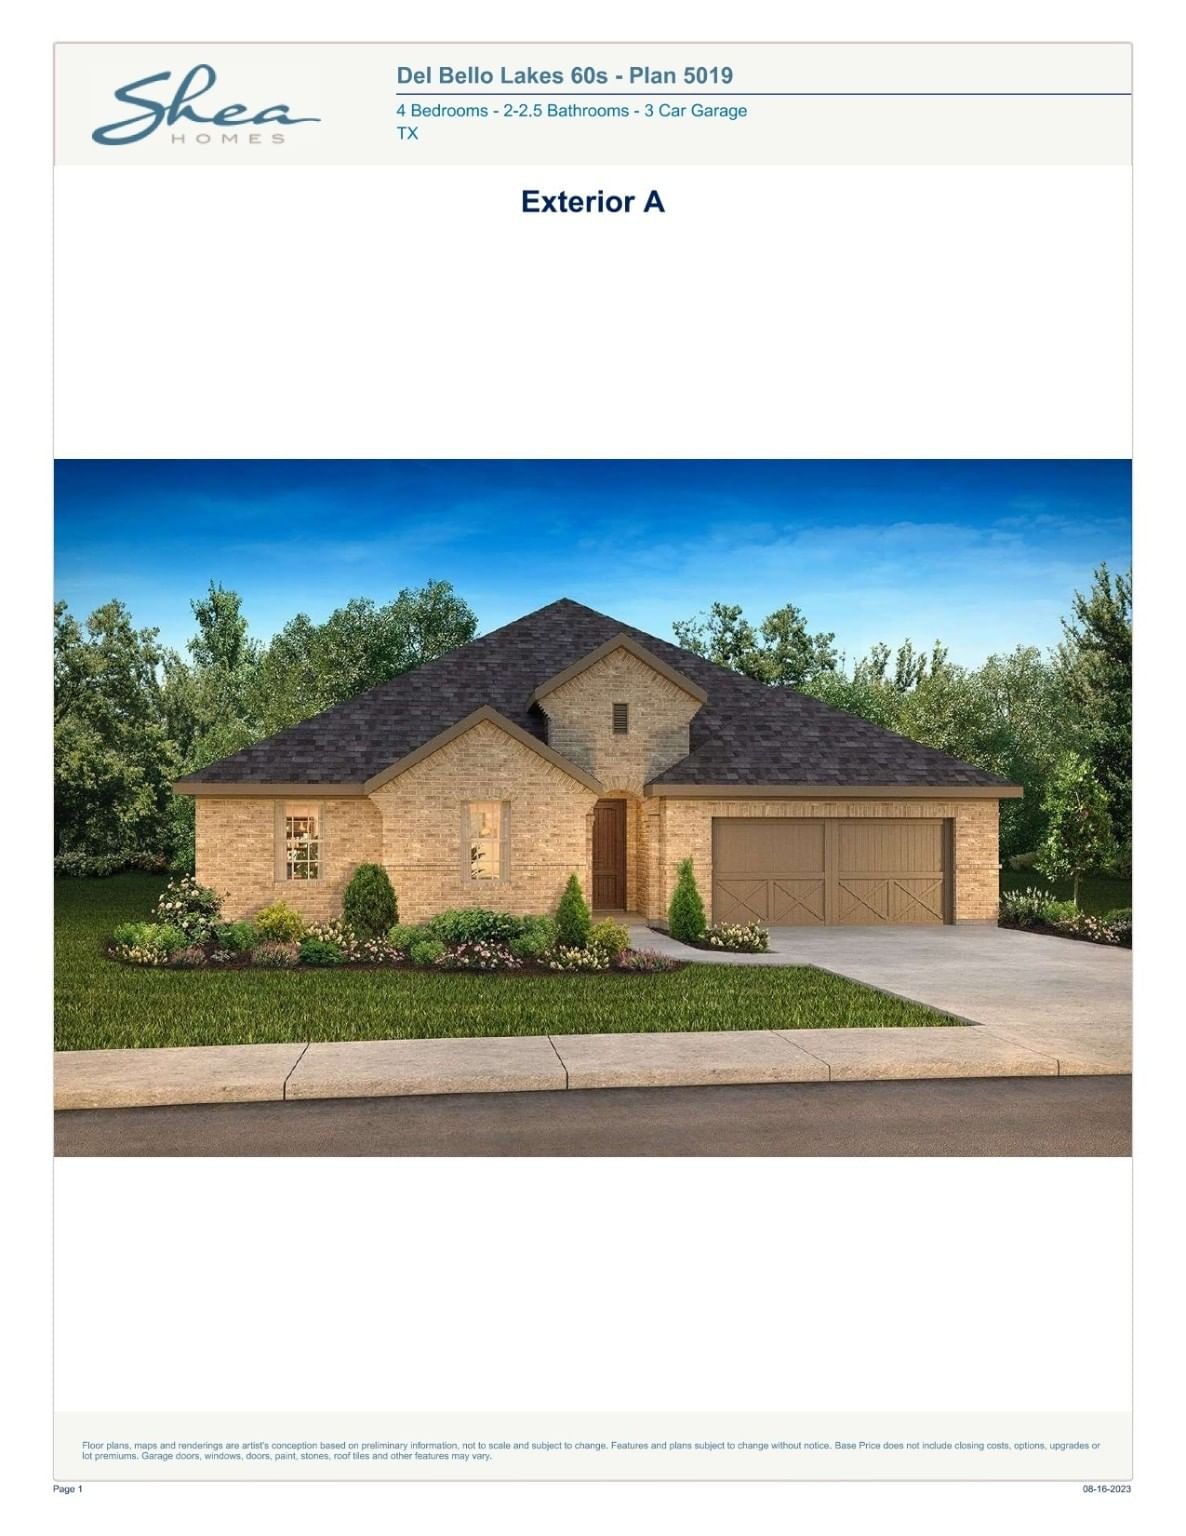 Real estate property located at 5514 Timpson, Brazoria, Del Bello Lakes, Manvel, TX, US